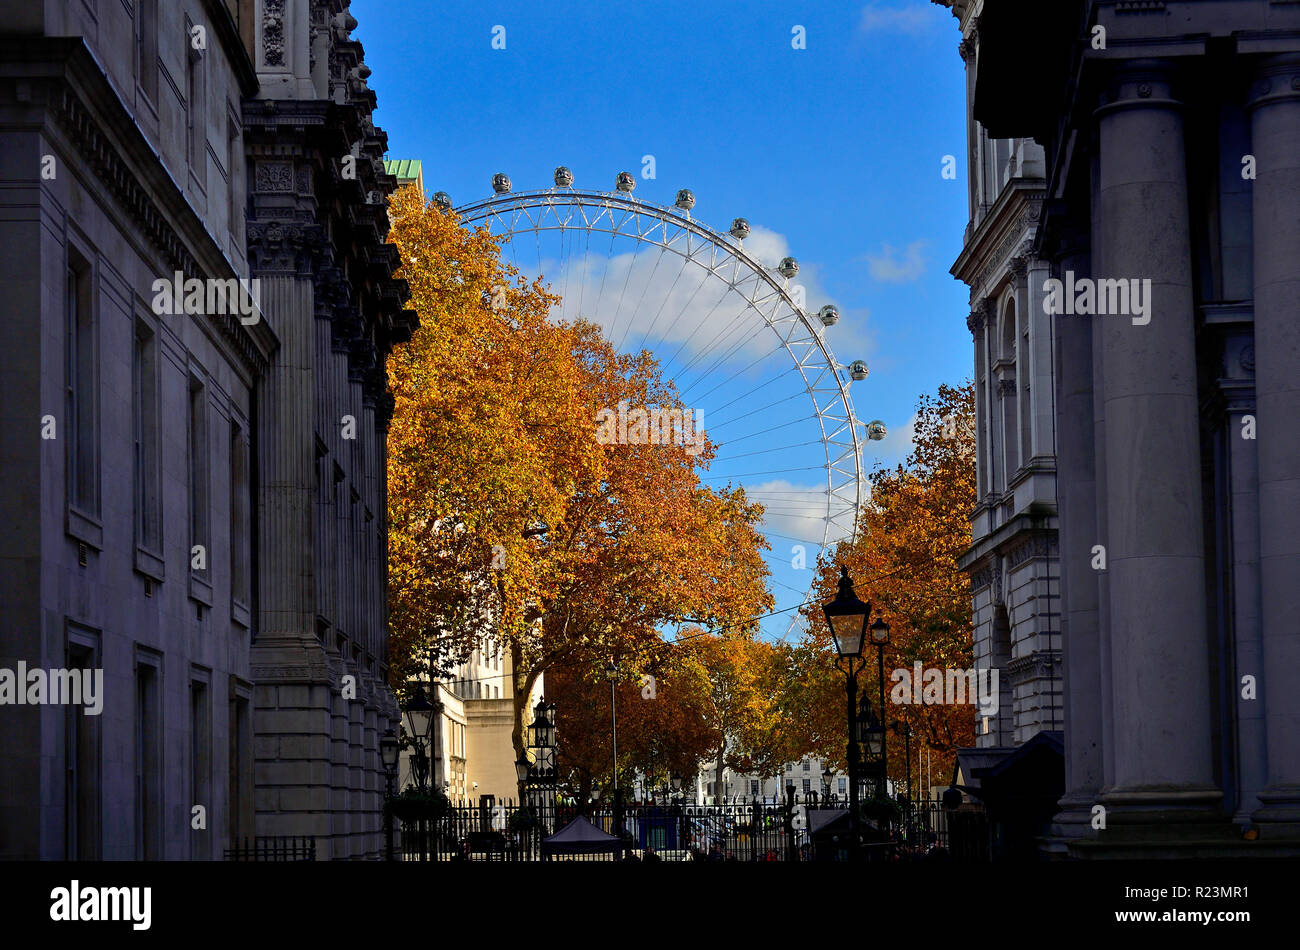 London Eye / Millennium Wheel visto da dentro Downing Street, Londra, Inghilterra, Regno Unito. Foto Stock